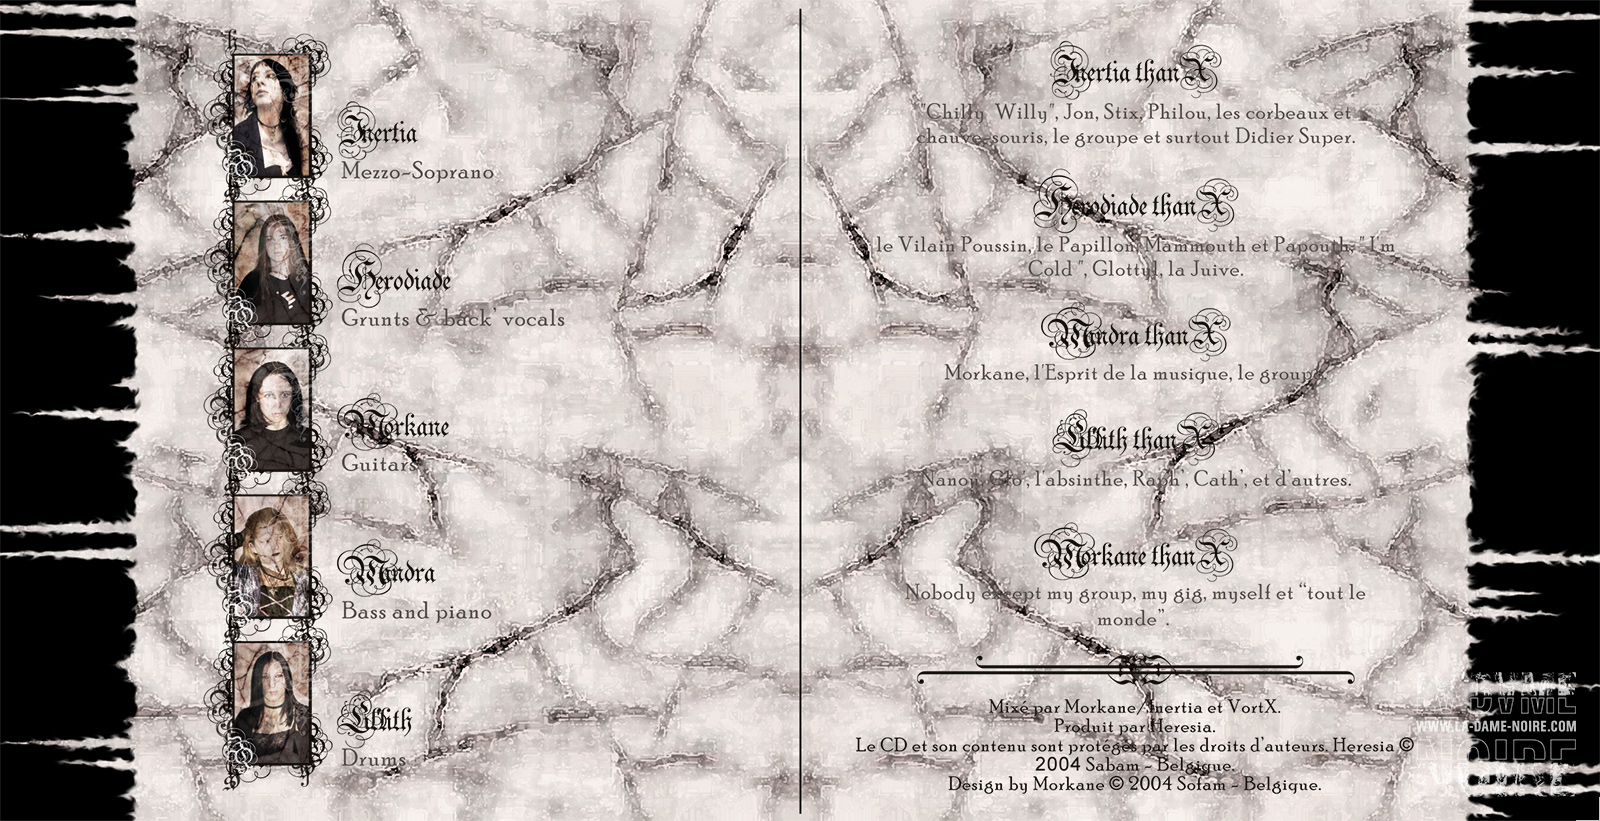 Internal folders of Heresia's CD